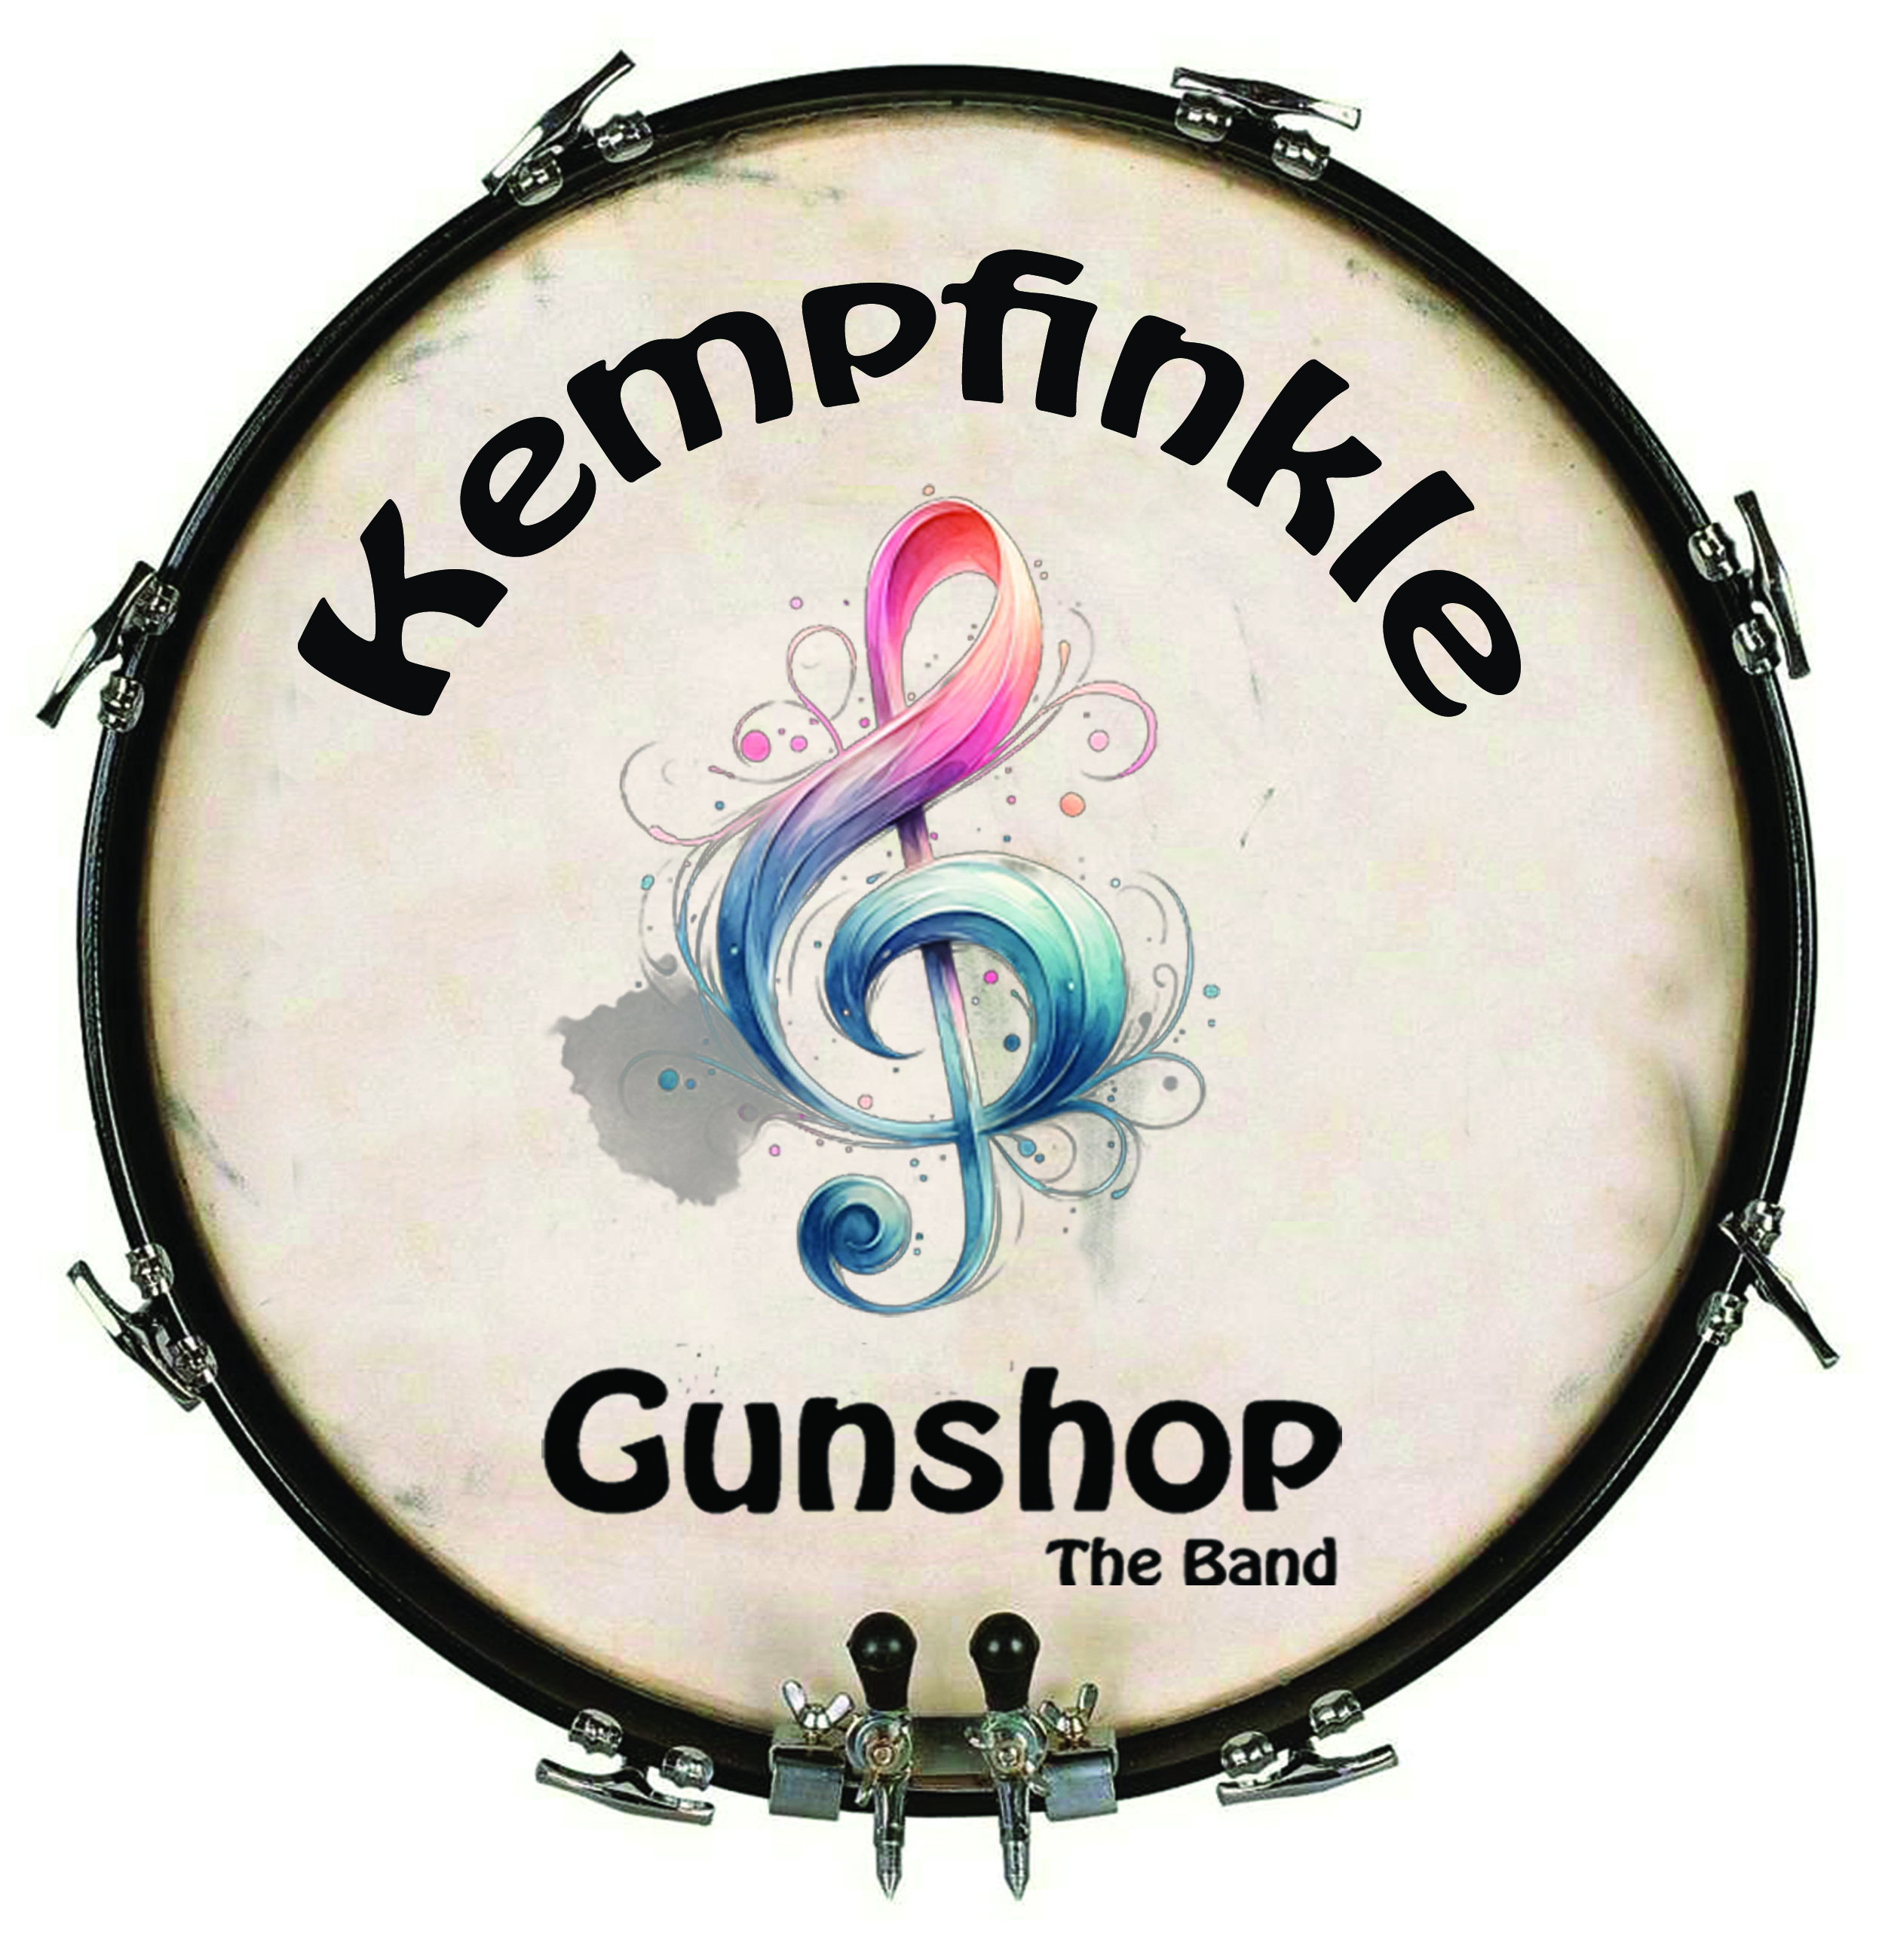 Kempfinkle Gunshop